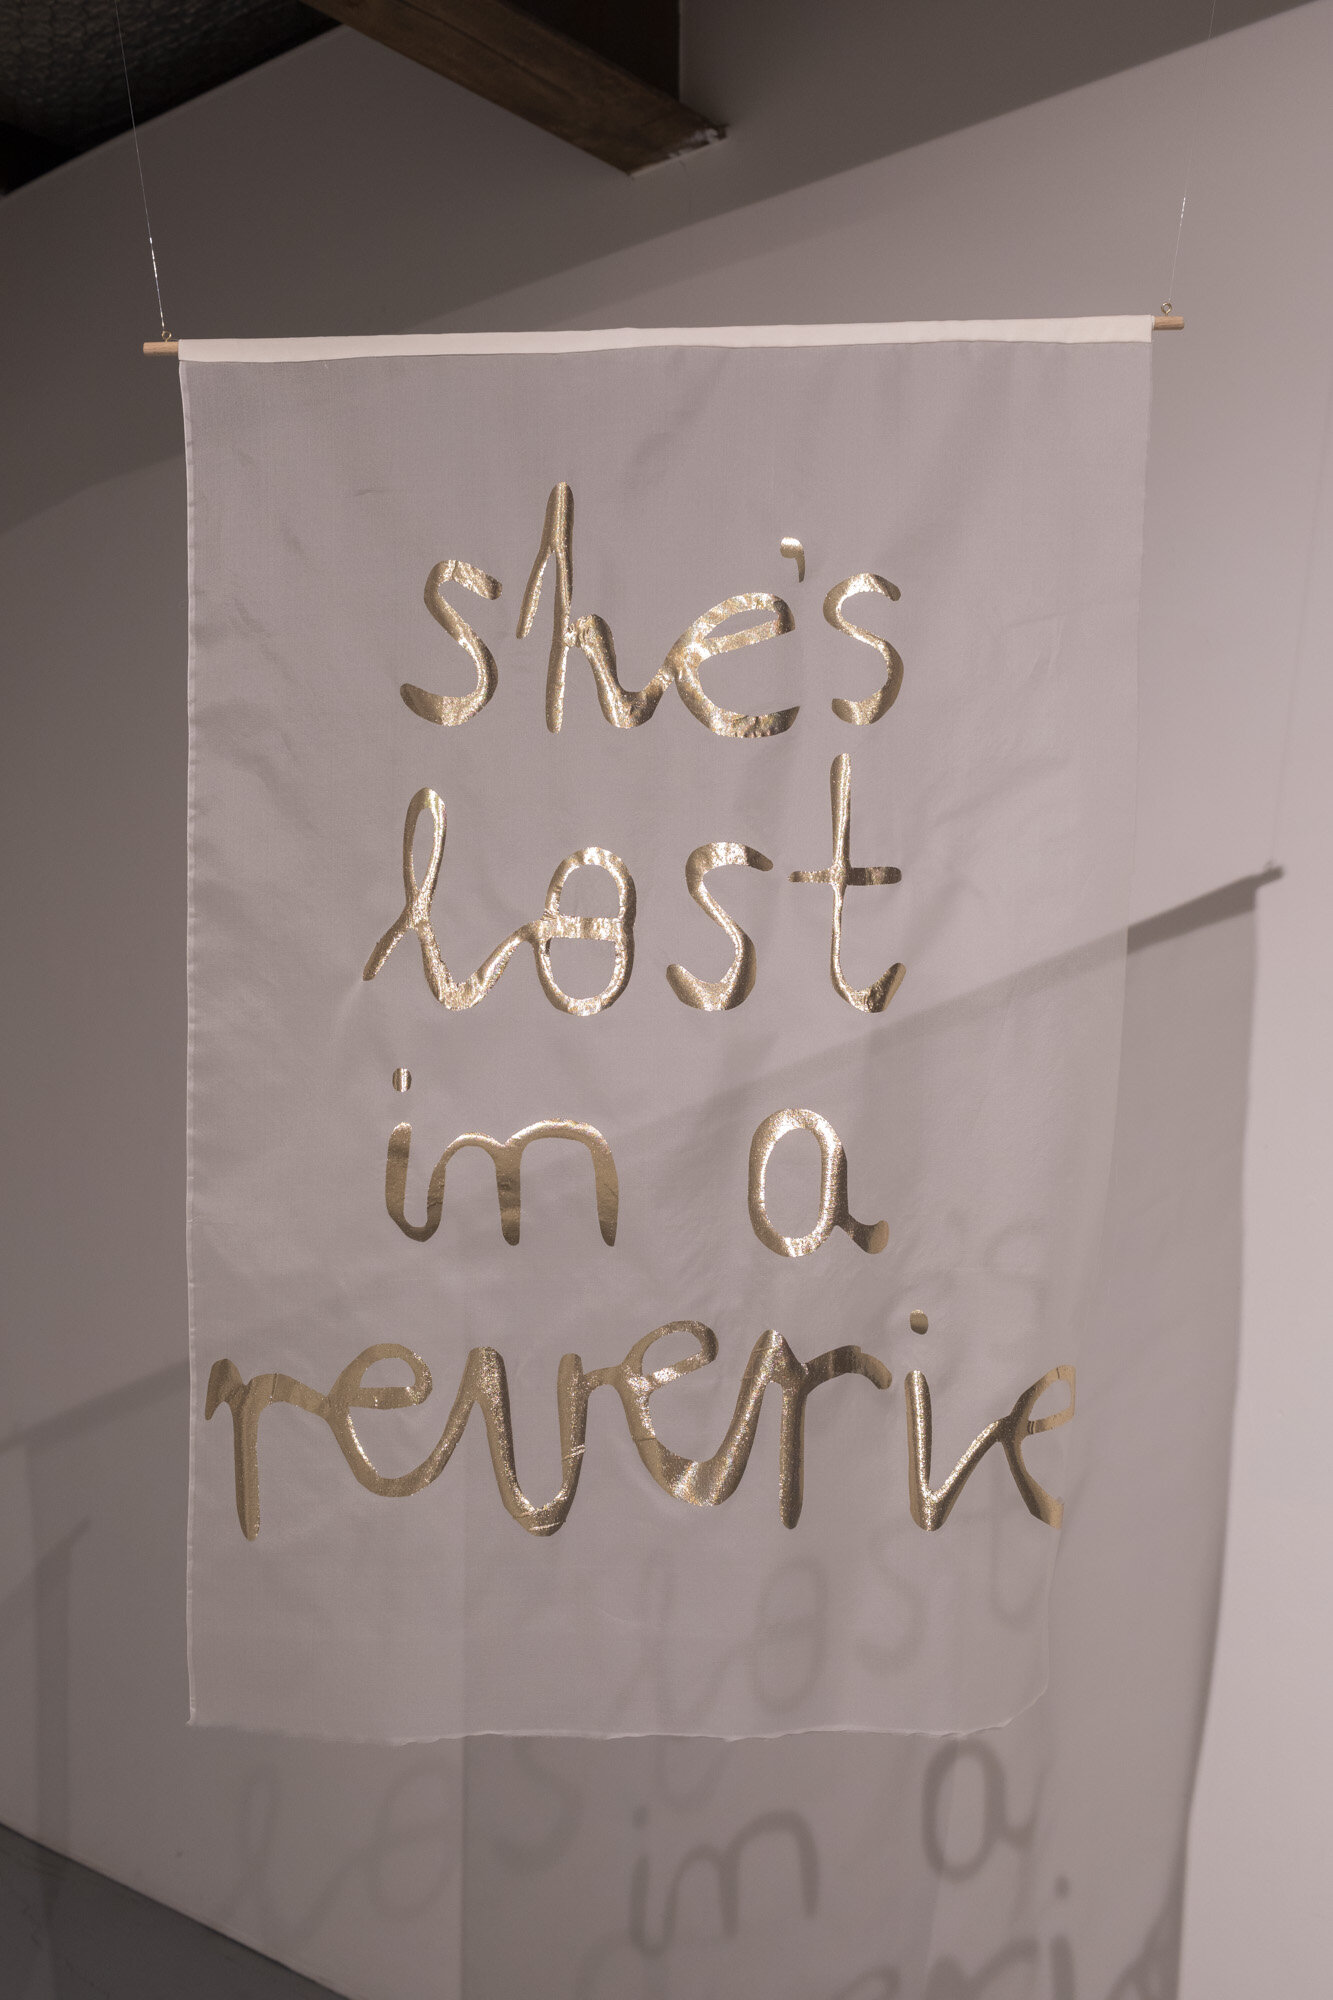   she’s lost in a reverie  free cut appliqué lamé on silk organza, 70cm x 100cm June 2021 AIRspace Projects  Image:  Joy M Lai   